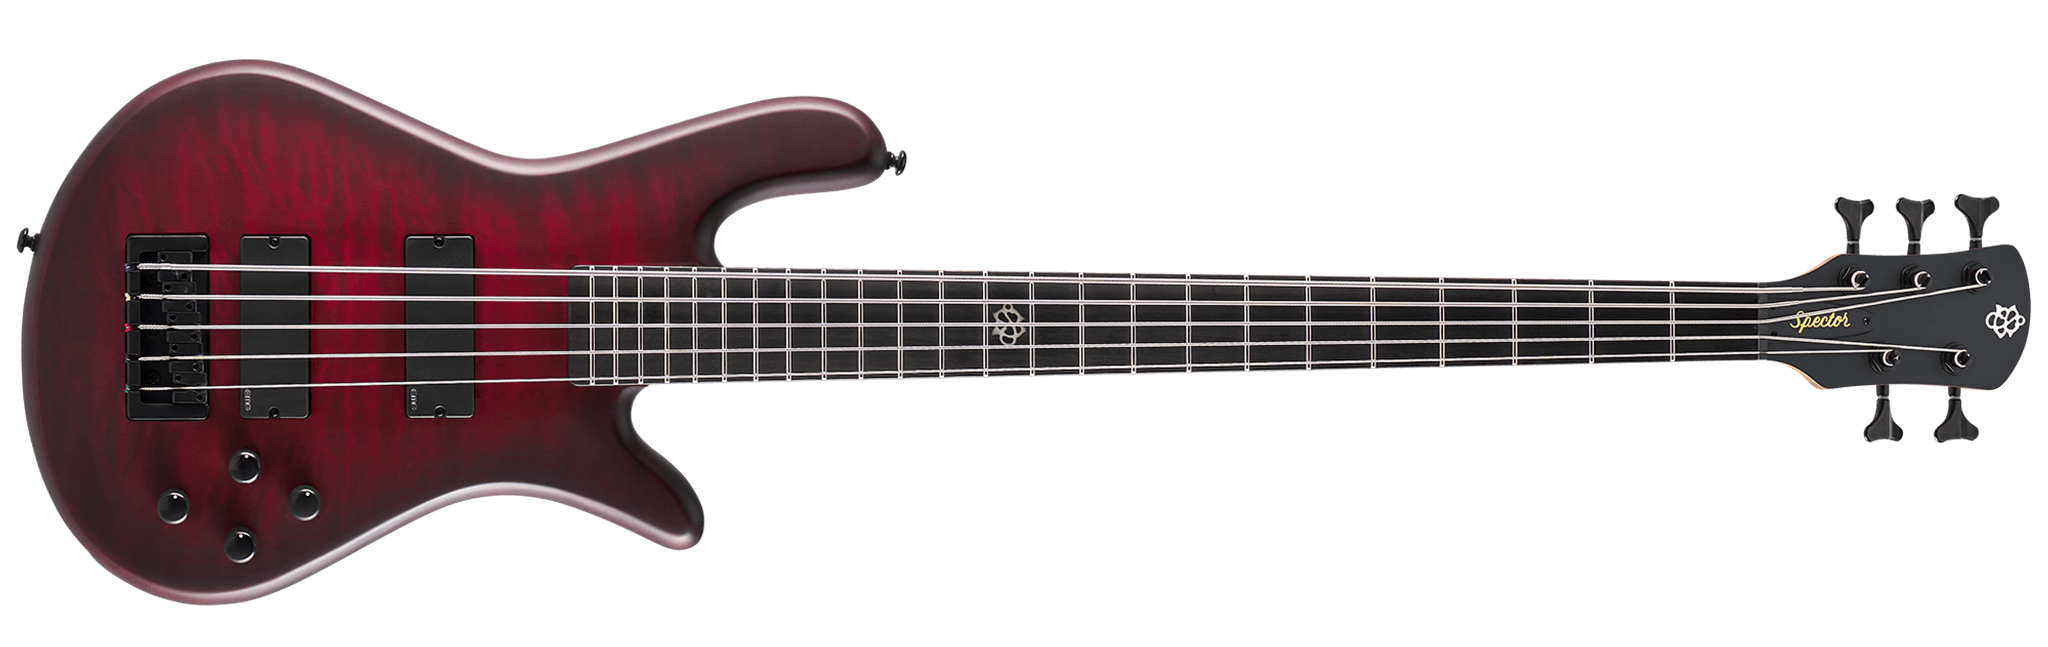 Spector NS Pulse-II Black Cherry Matte 5-String Electric Bass Guitar  